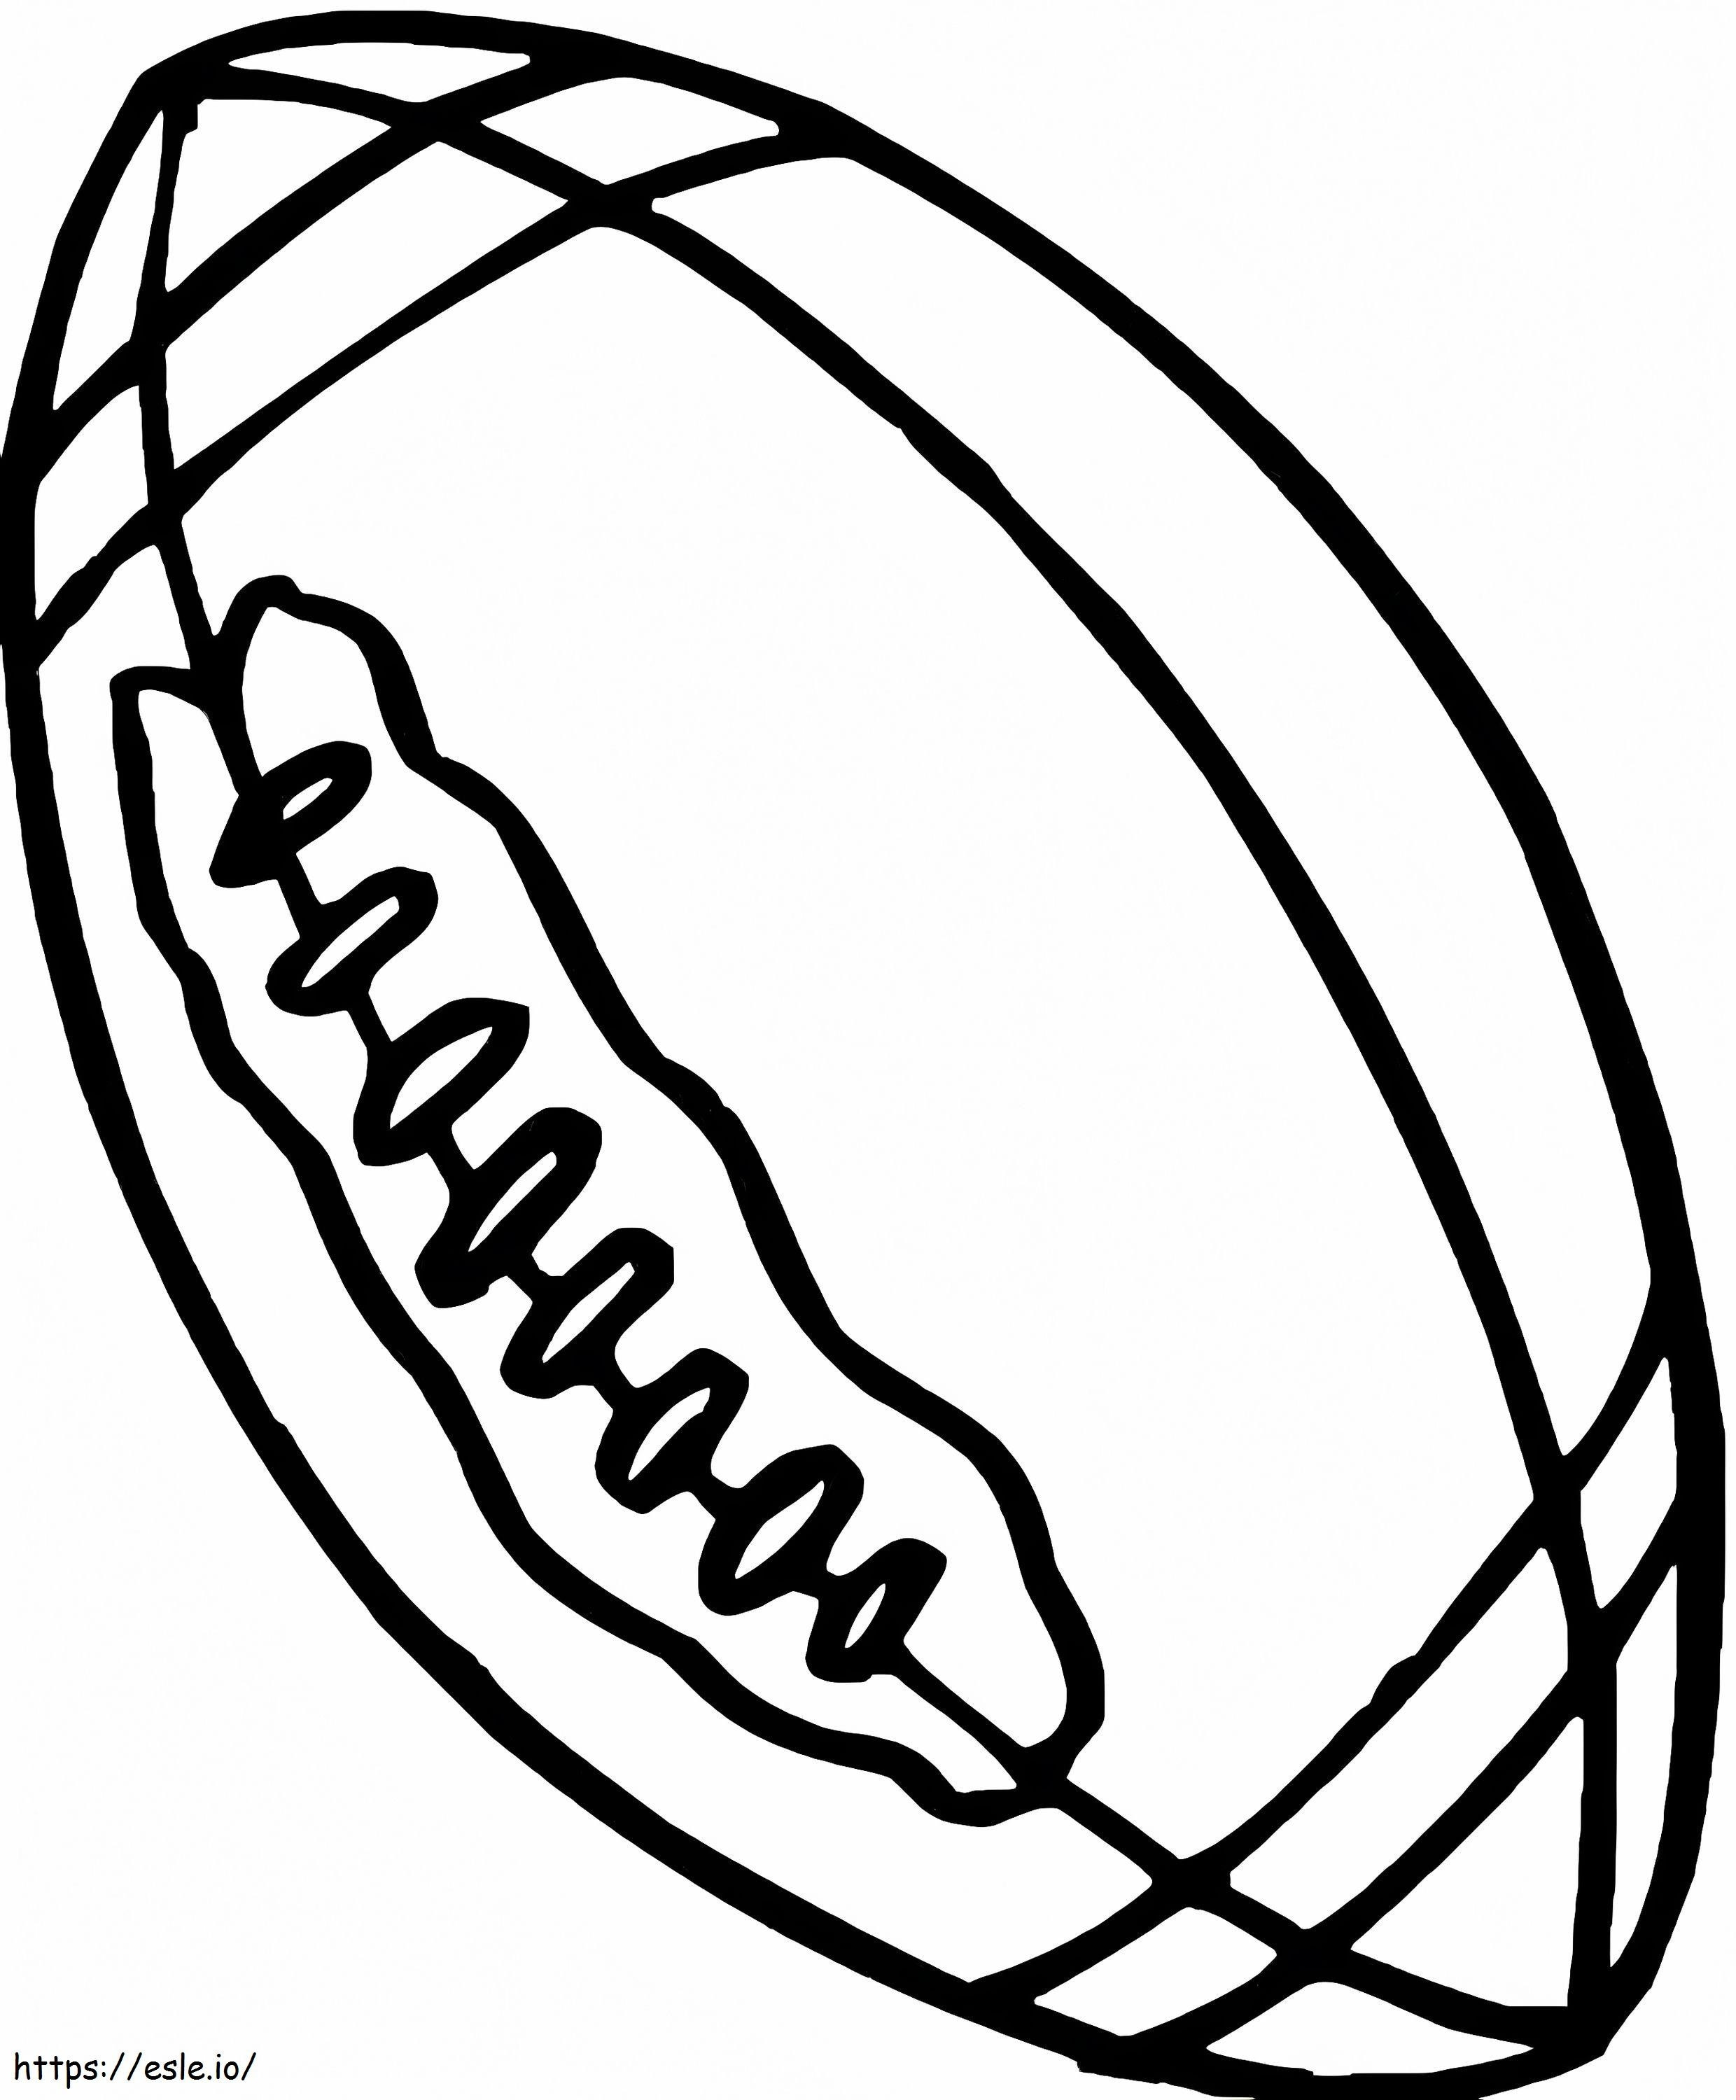 Bola de rugby grátis para colorir